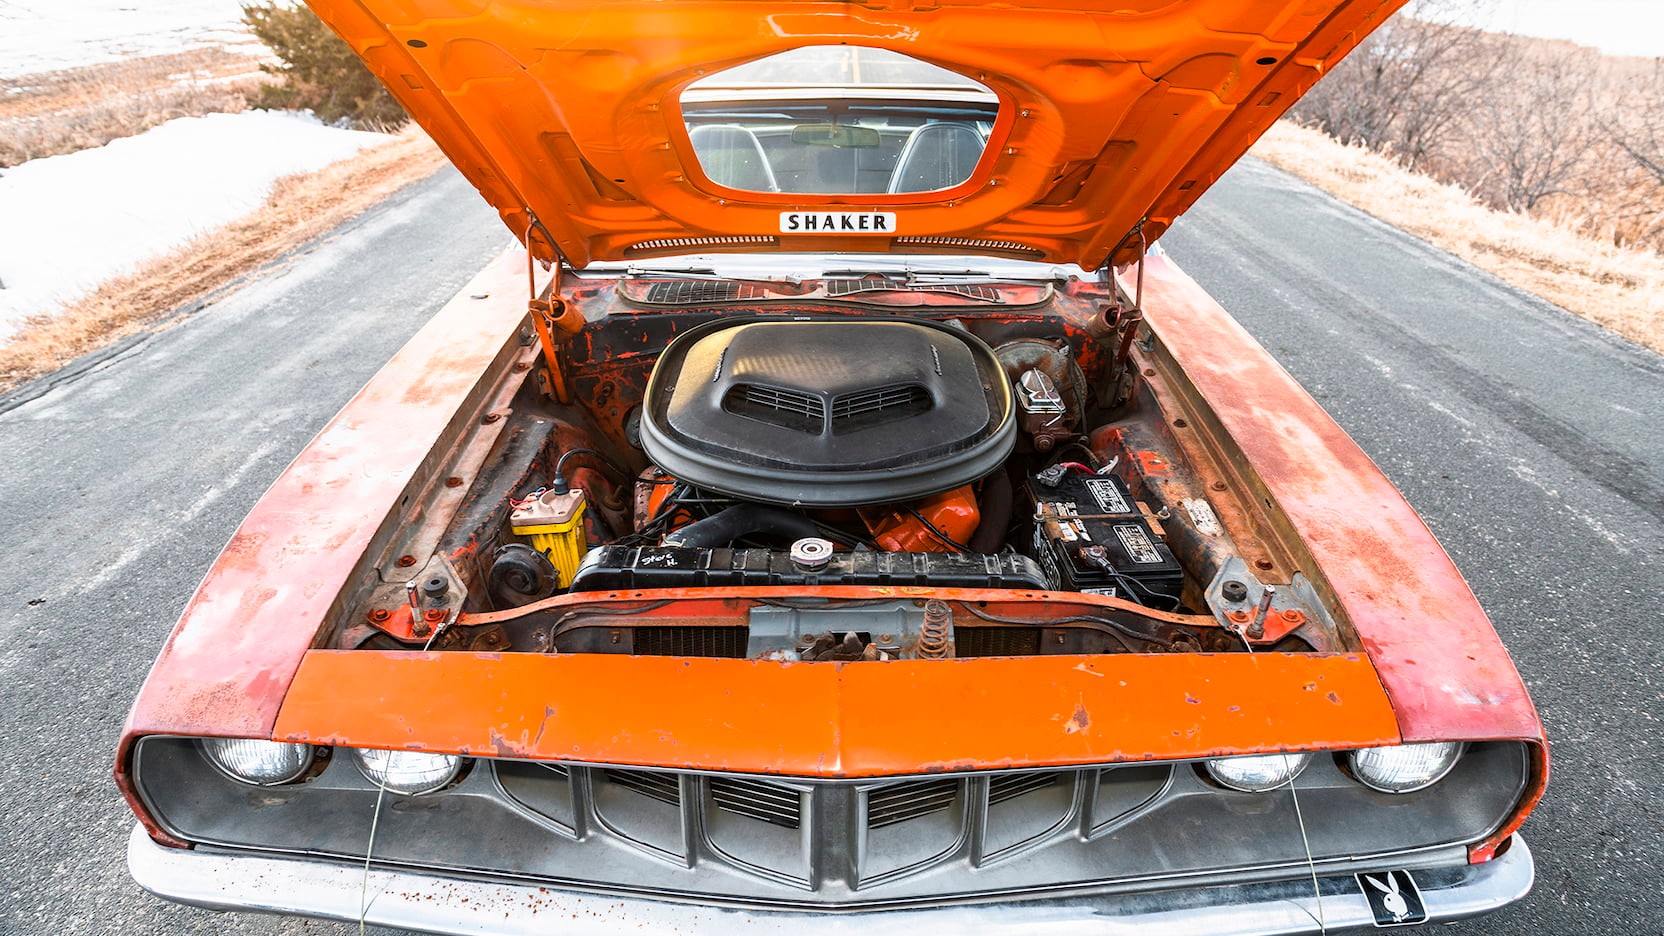 Ржавый американский авто 70-х продают по цене двух Lamborghini